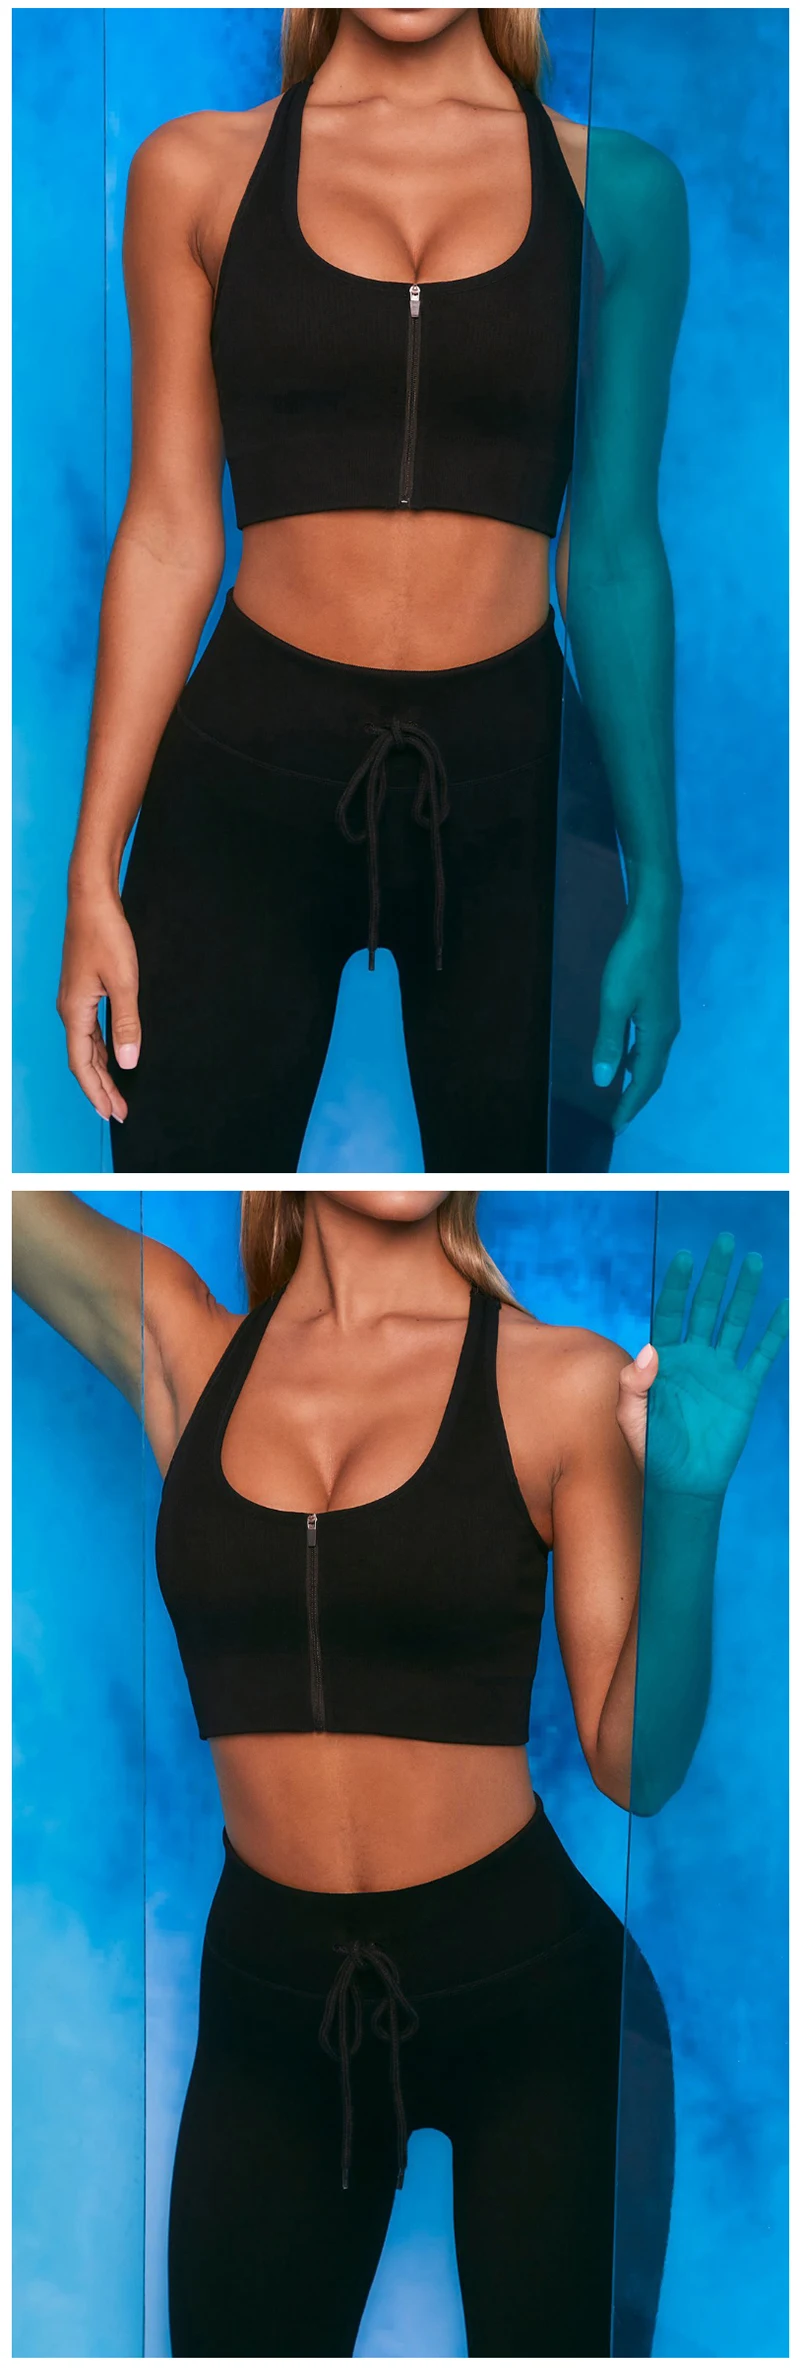 Zipper Seamless Yoga Set Two Piece Women Crop Top Bra Drawstring Shorts Sportsuit Workout Clothes Outfit Sport Fitness Gym Wear